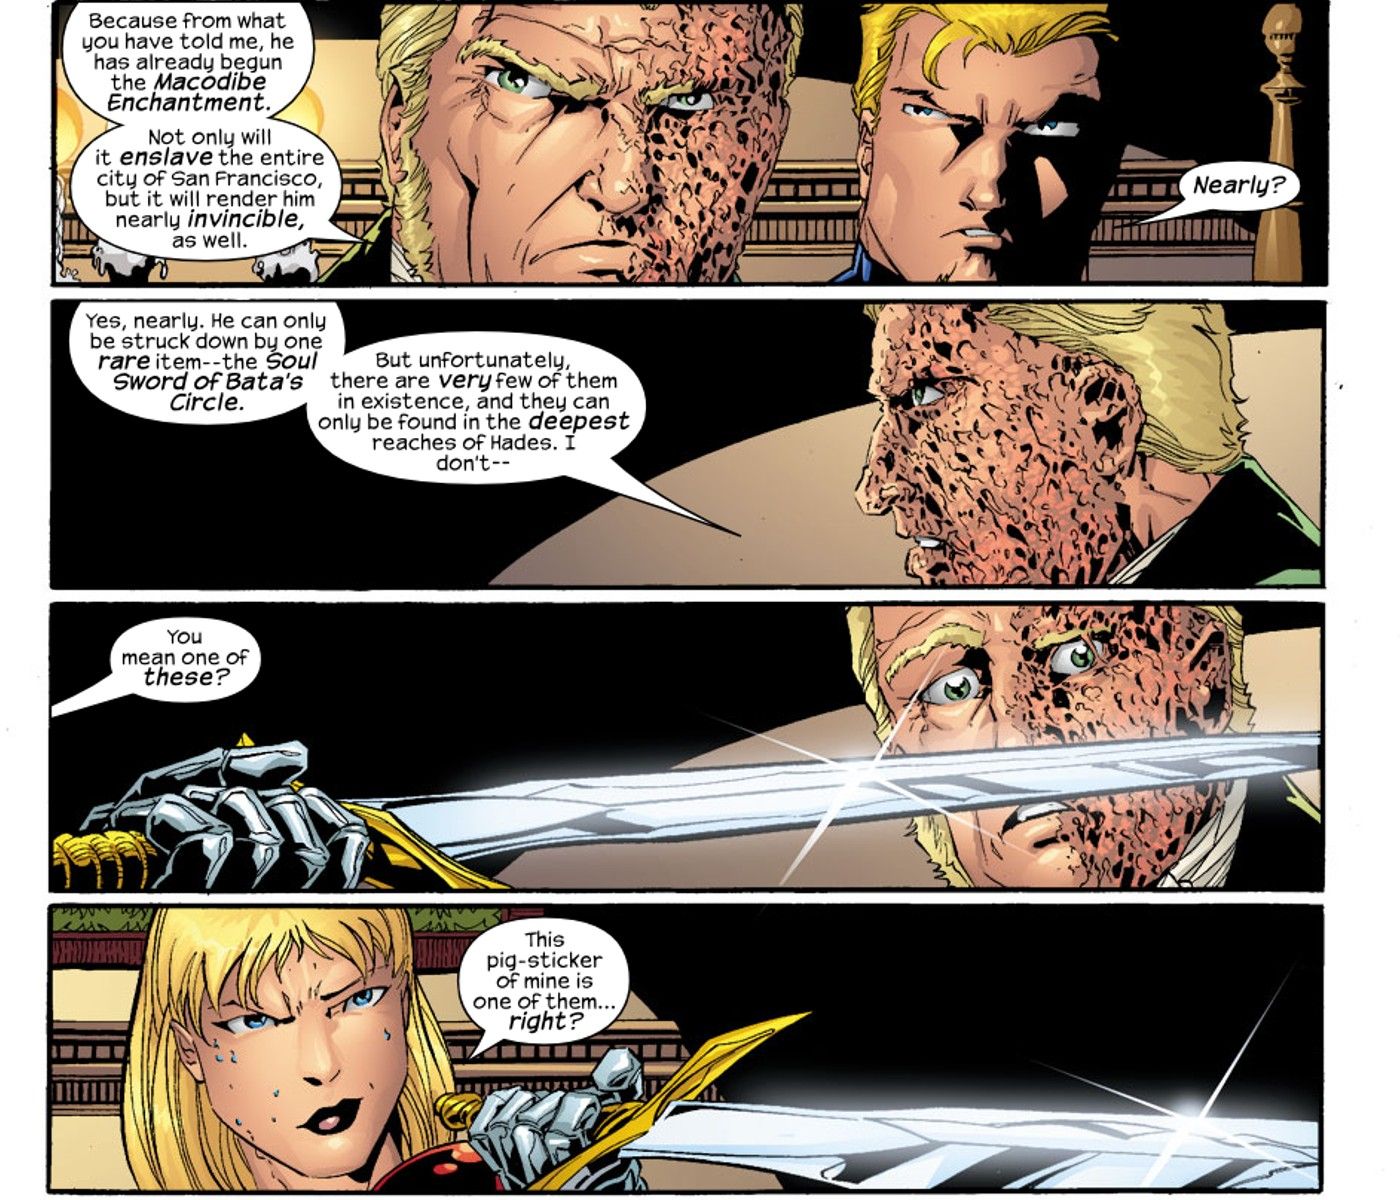 Marvel’s Greatest Vampire Hunter isn’t Blade, It’s an X-Men Hero